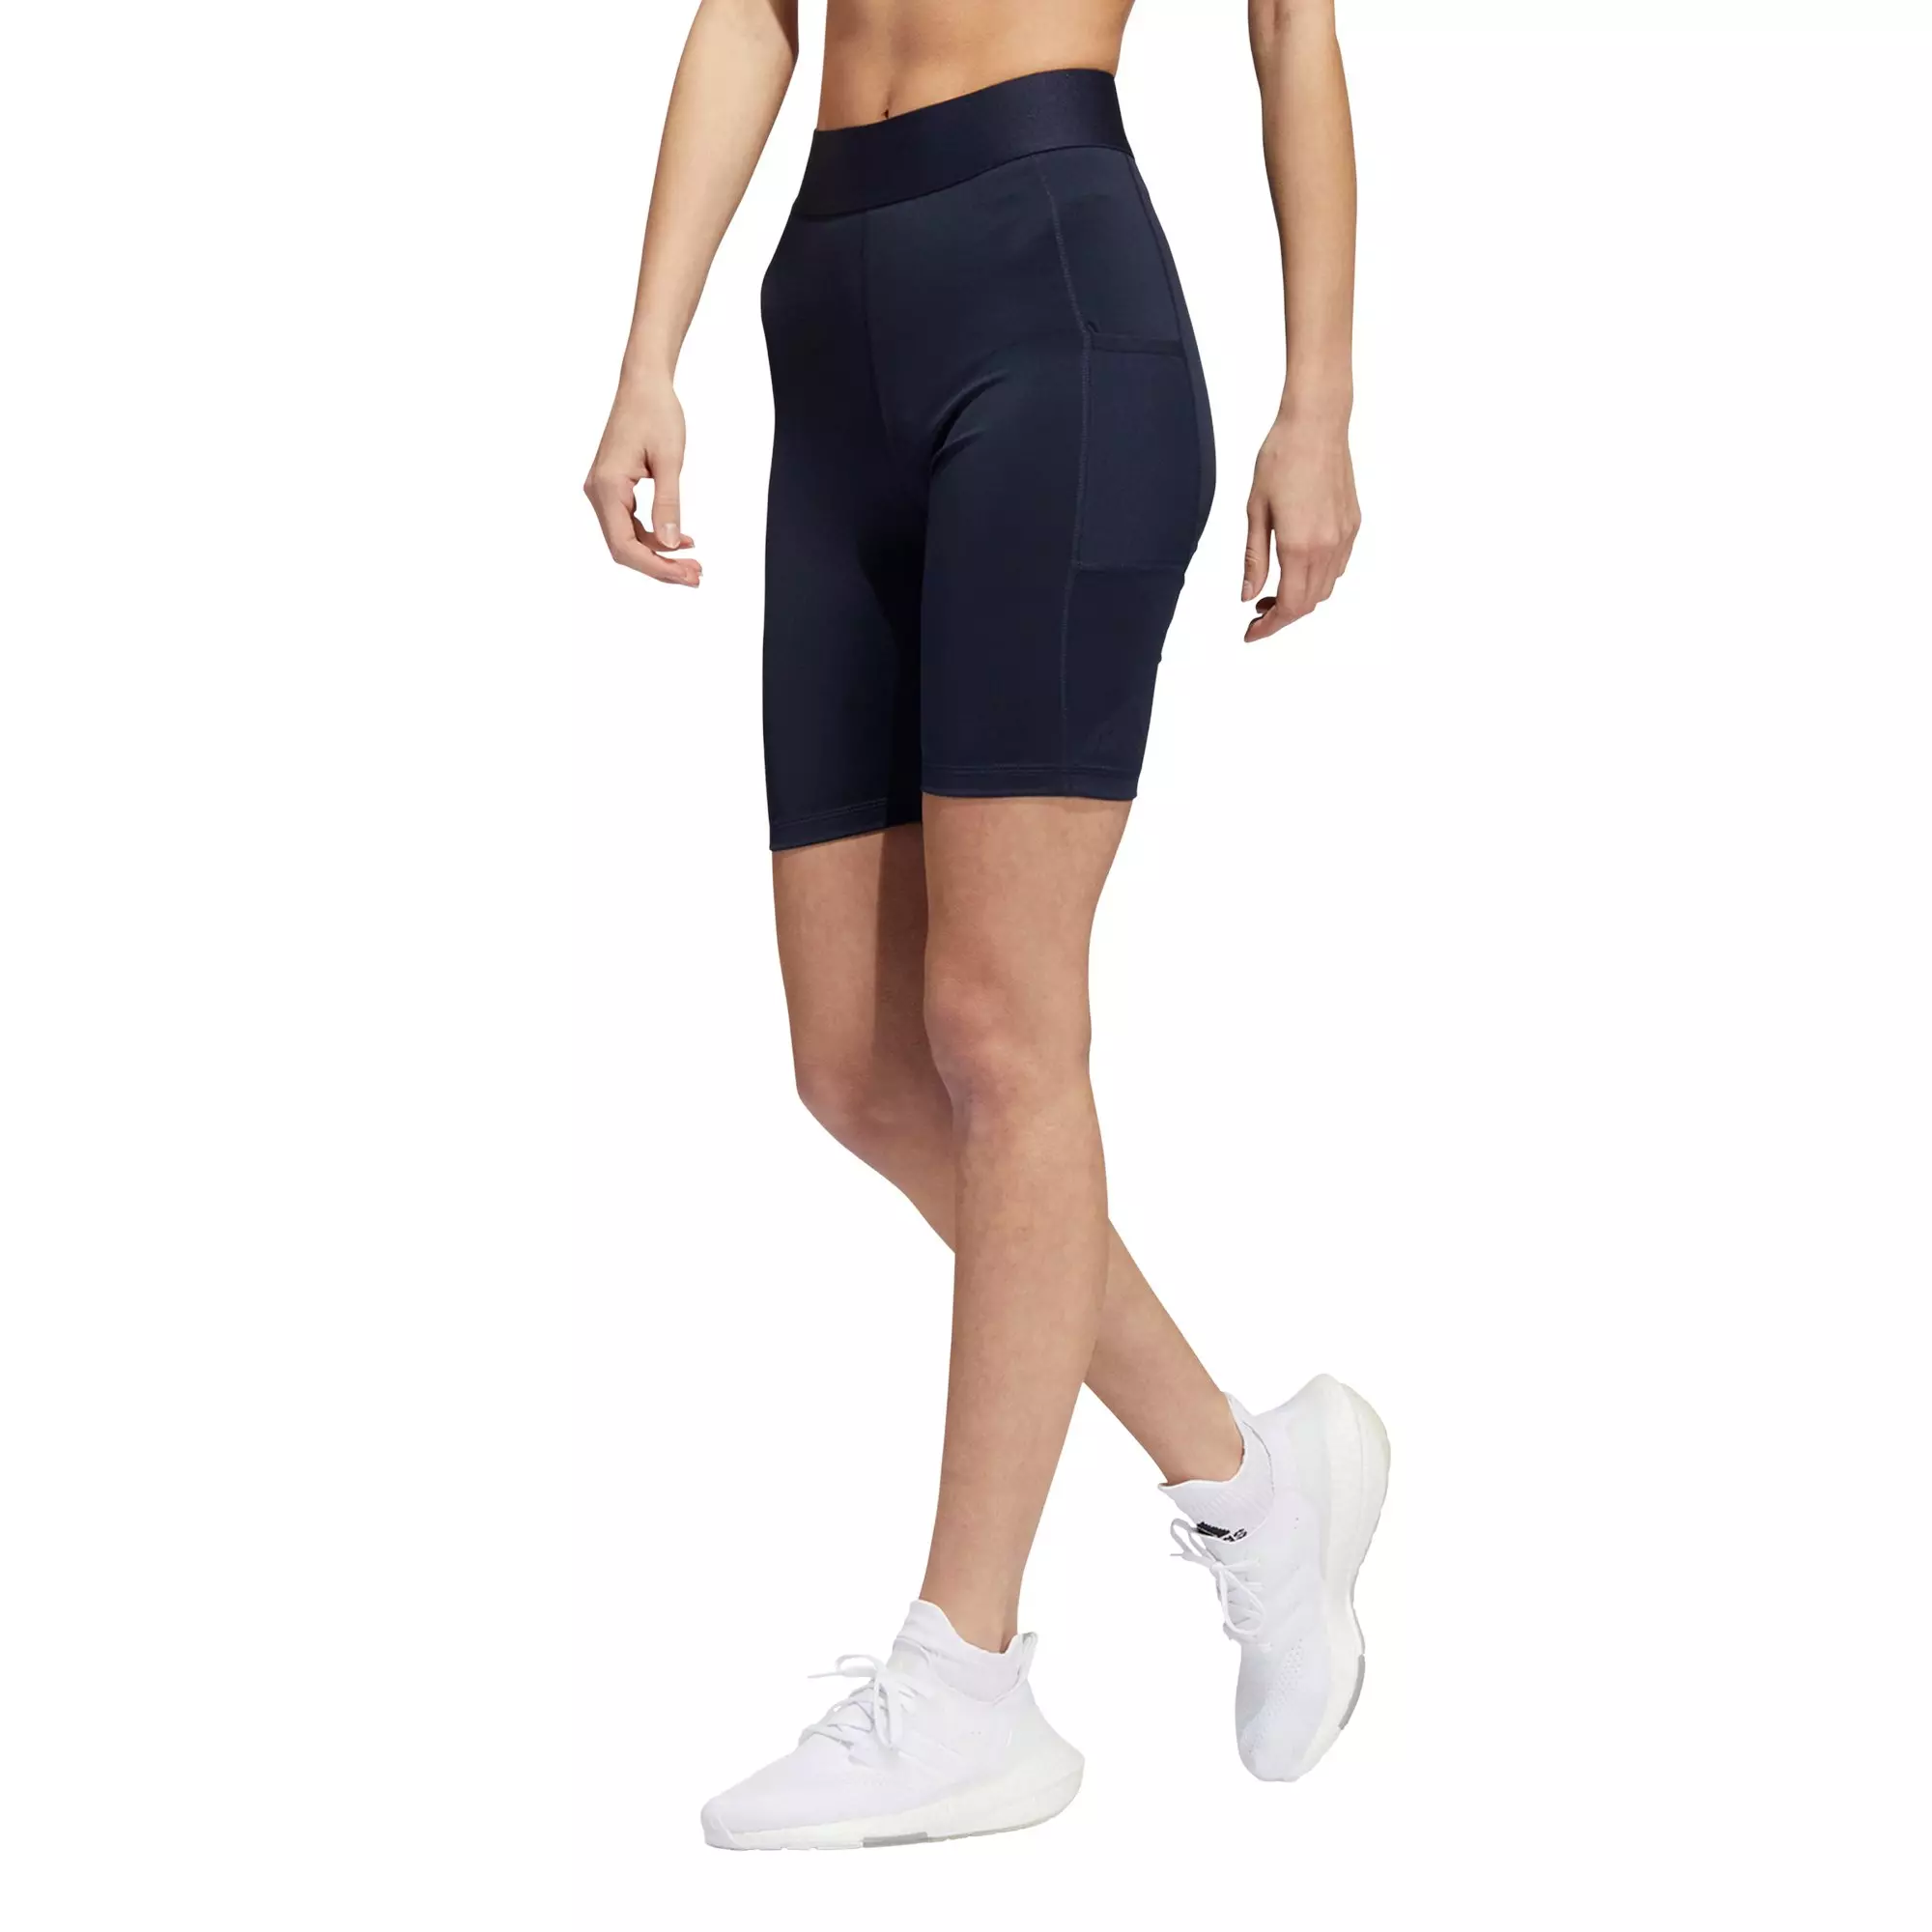 Adidas Women's Techfit Running Training 3 Short Leggings Shorts Small Navy